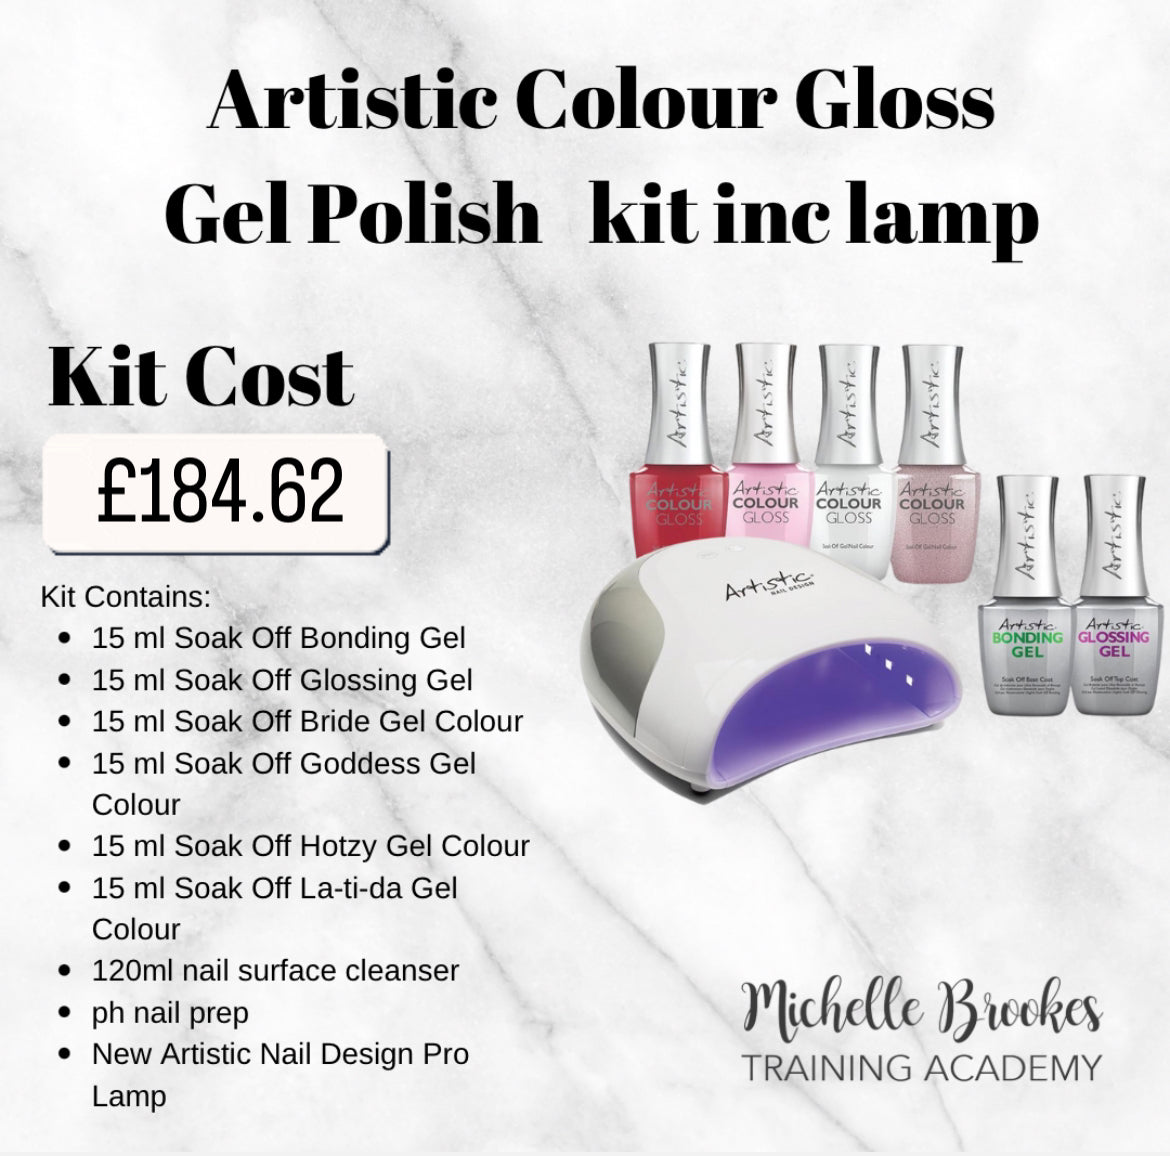 Gel Polish kit with lamp - Artistic Colour Gloss